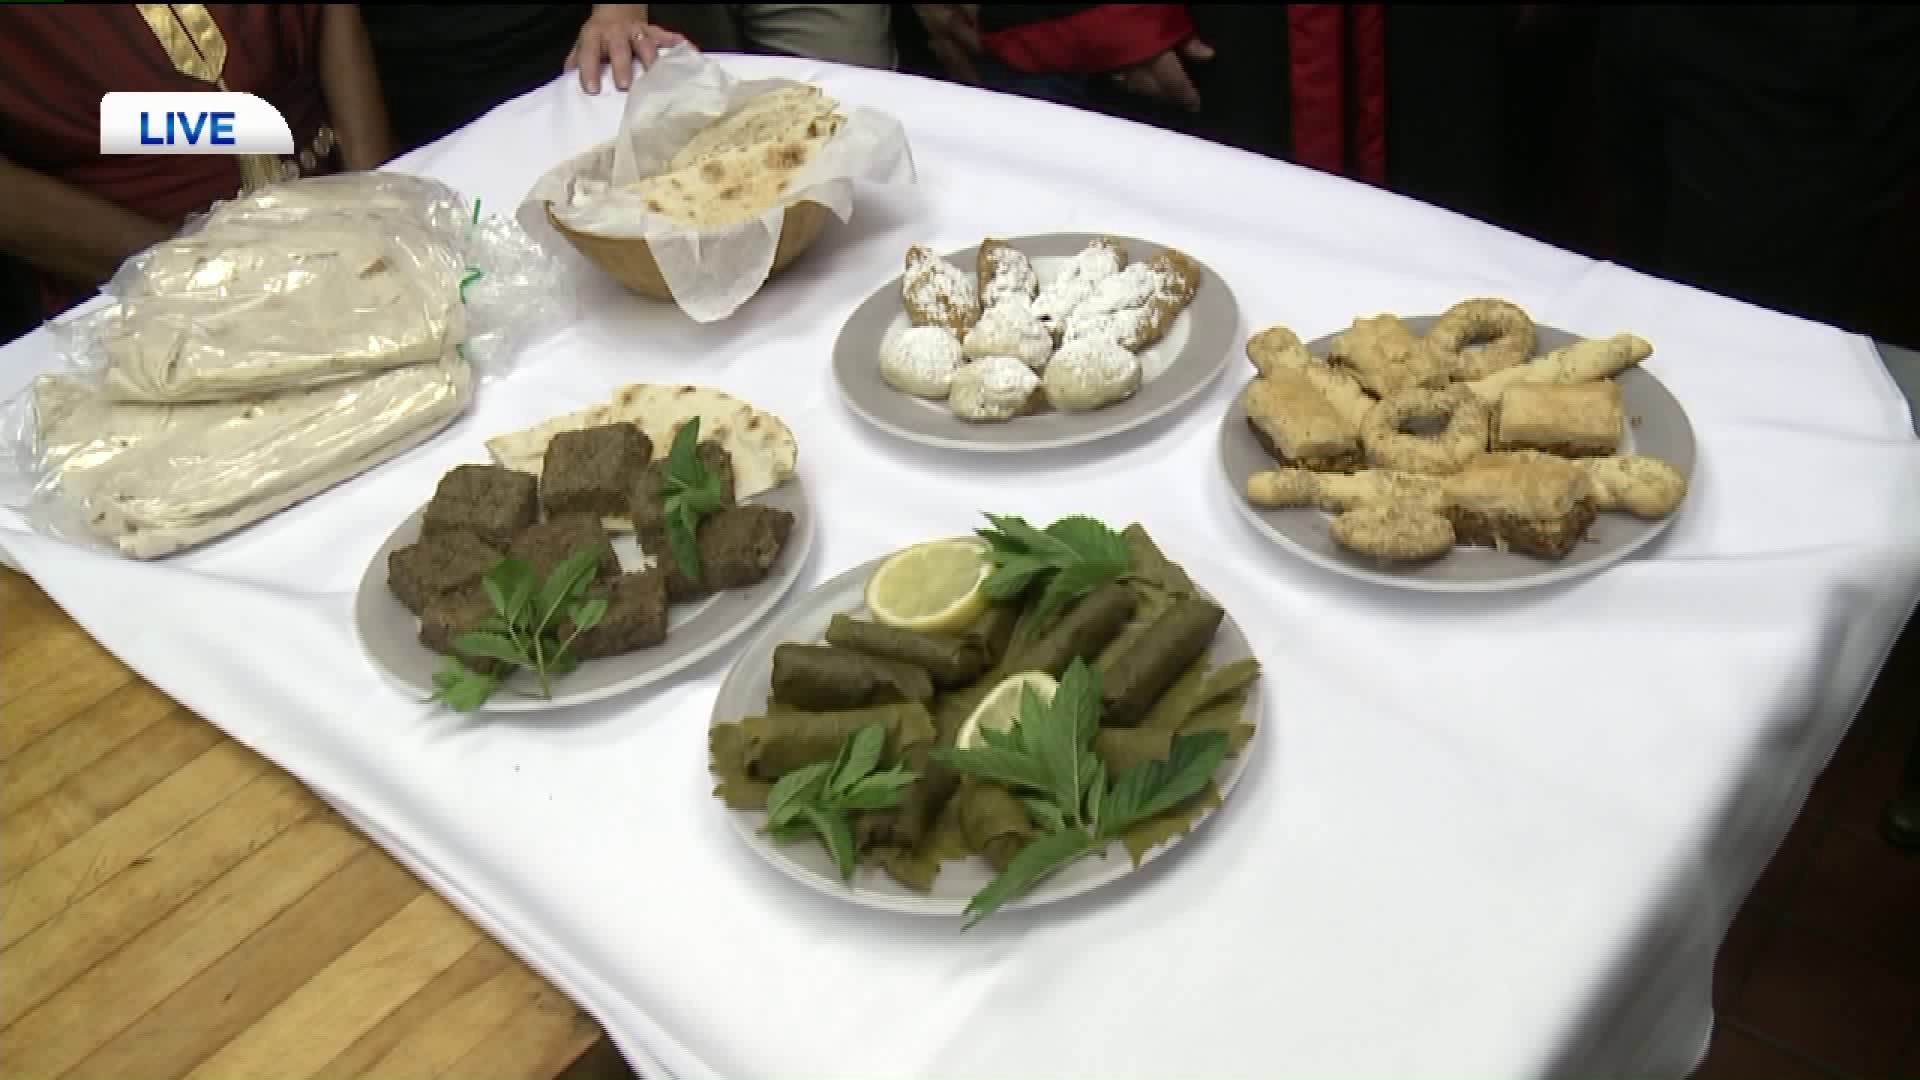 Lebanese Heritage Festival: Exciting Ethnic Eats